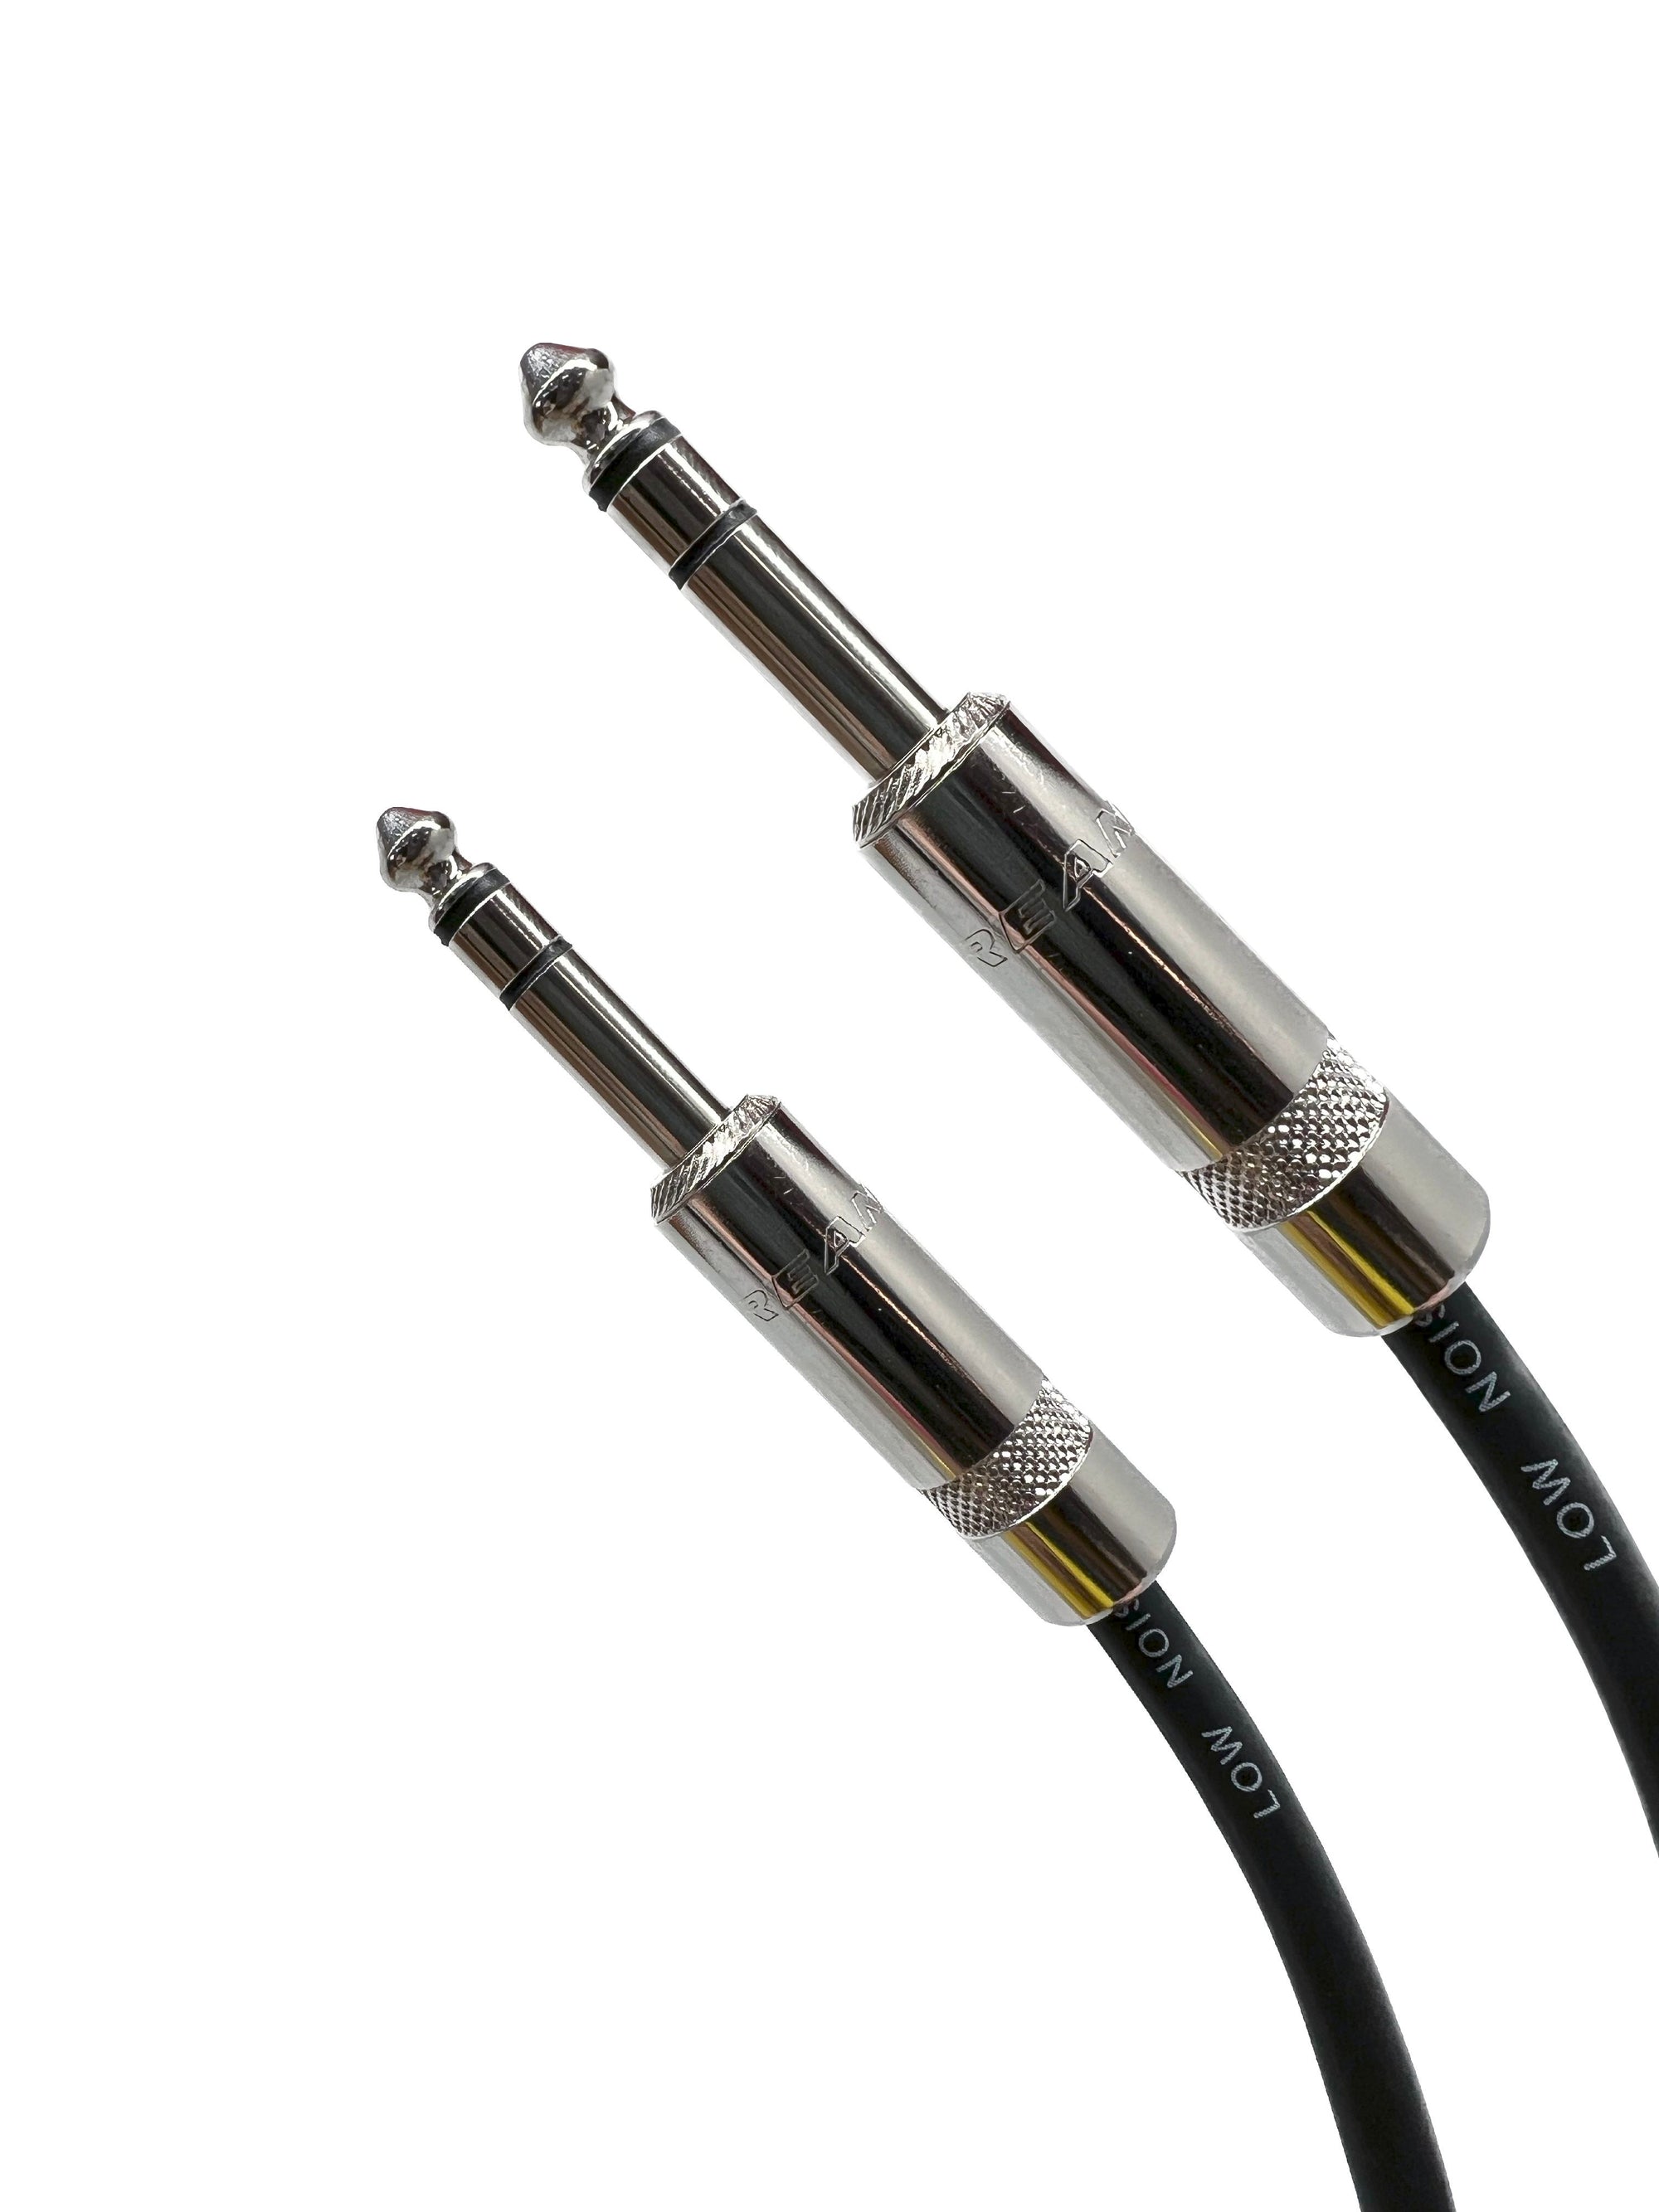 Standard Series XLR Plug to Stereo 3.5mm Mini Plug Audio Cable 3ft